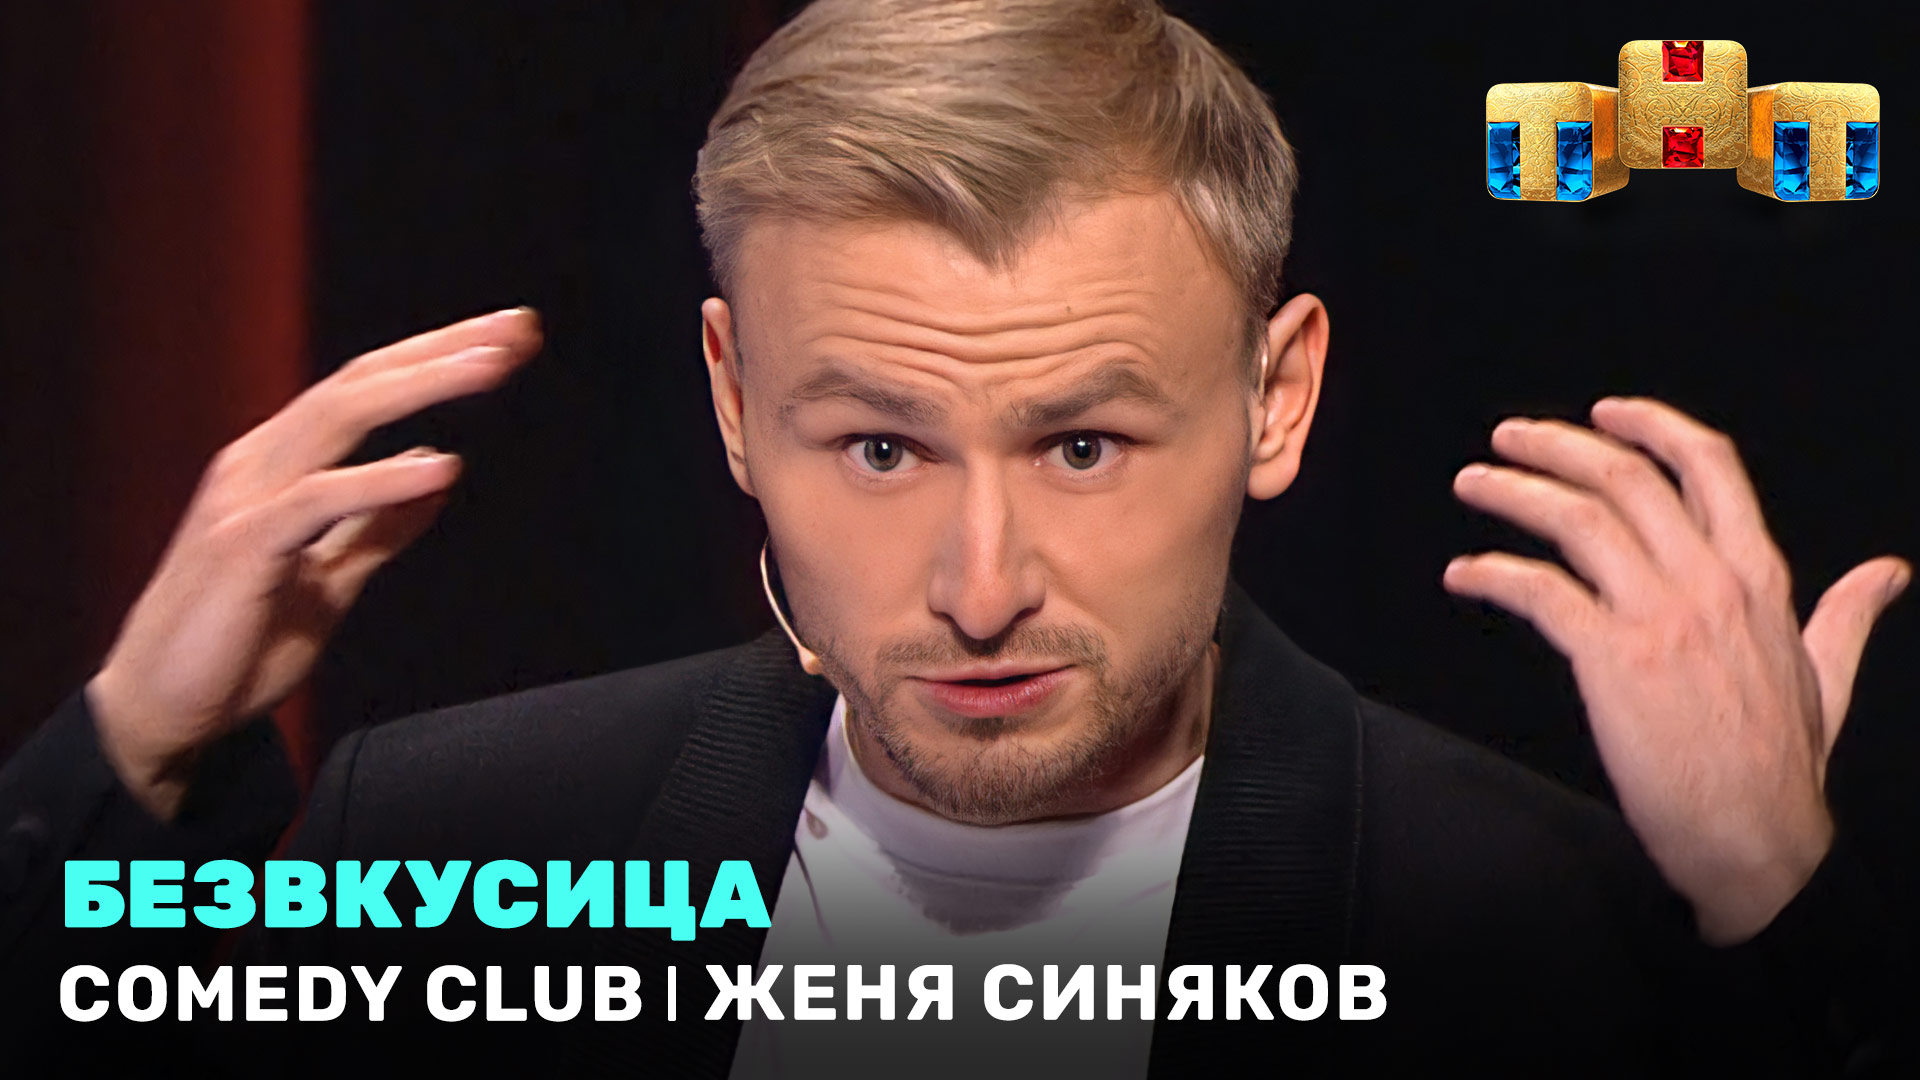 Comedy Club: Женя Синяков - Безвкусица